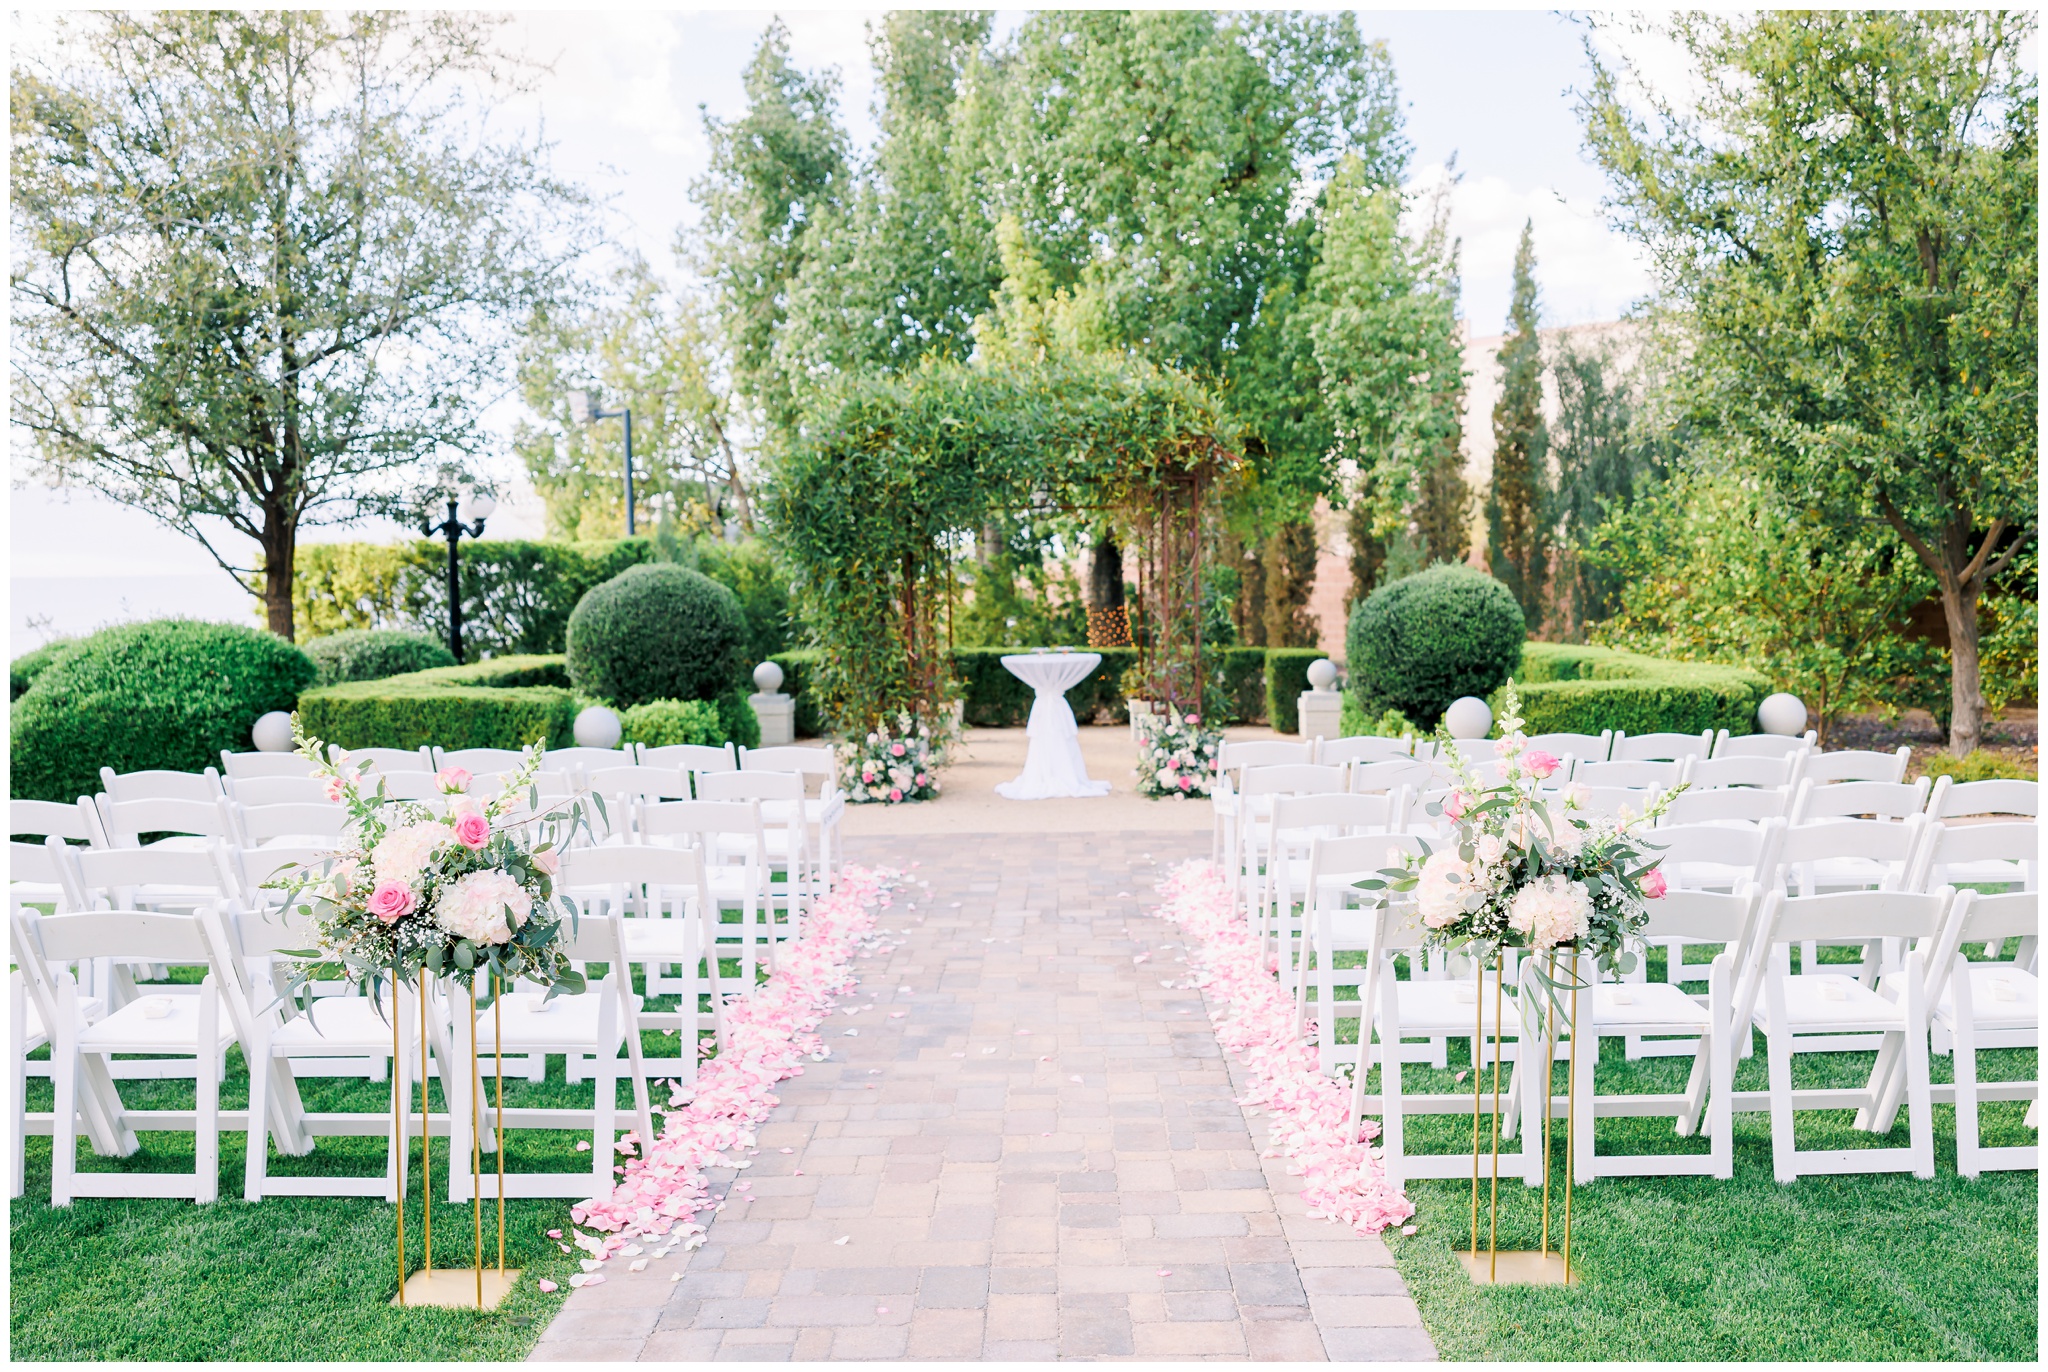 Stonebridge Manor Ceremony Location with blush florals